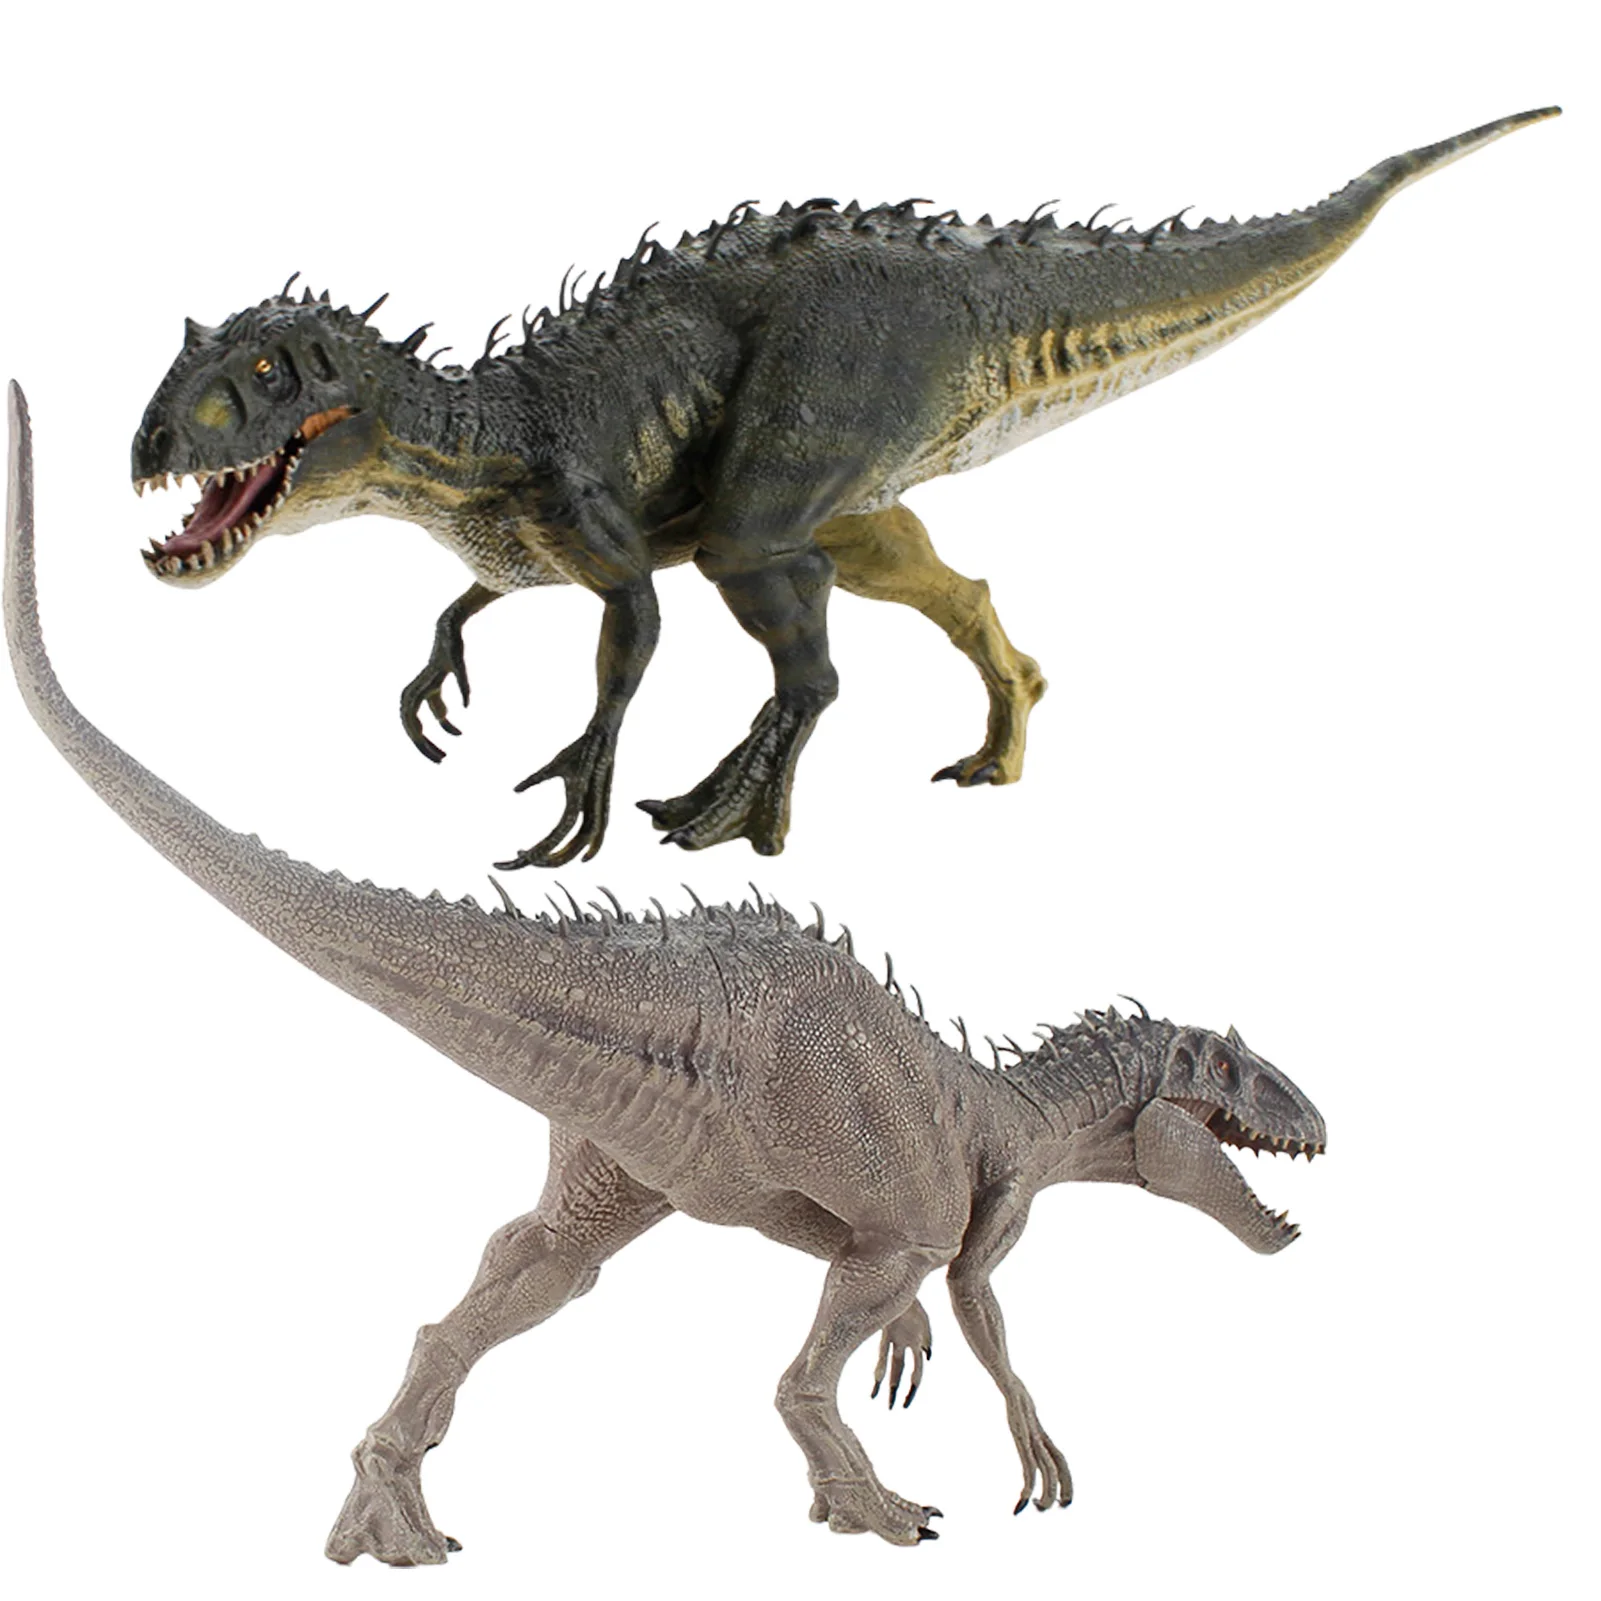 

Simulation Jurassic Dinosaur Figures Toy Dino Park Tyrannosaurus Rex Velociraptor Educational Dinosaur Model Collection Toy Kids